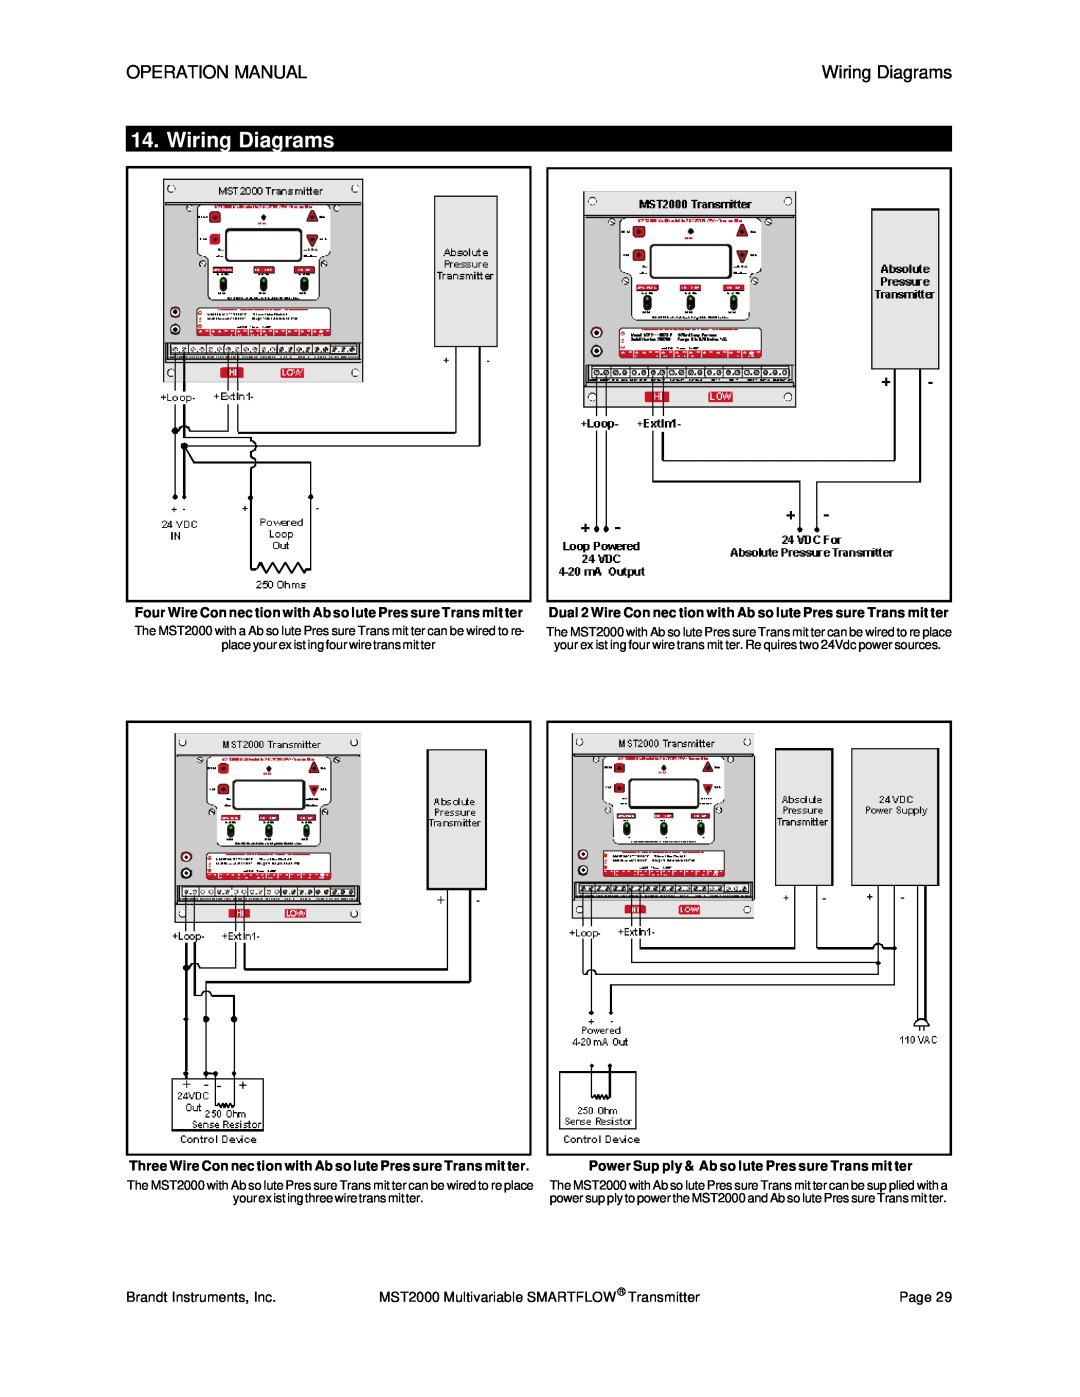 Tamron MST2000 operation manual Wiring Diagrams 